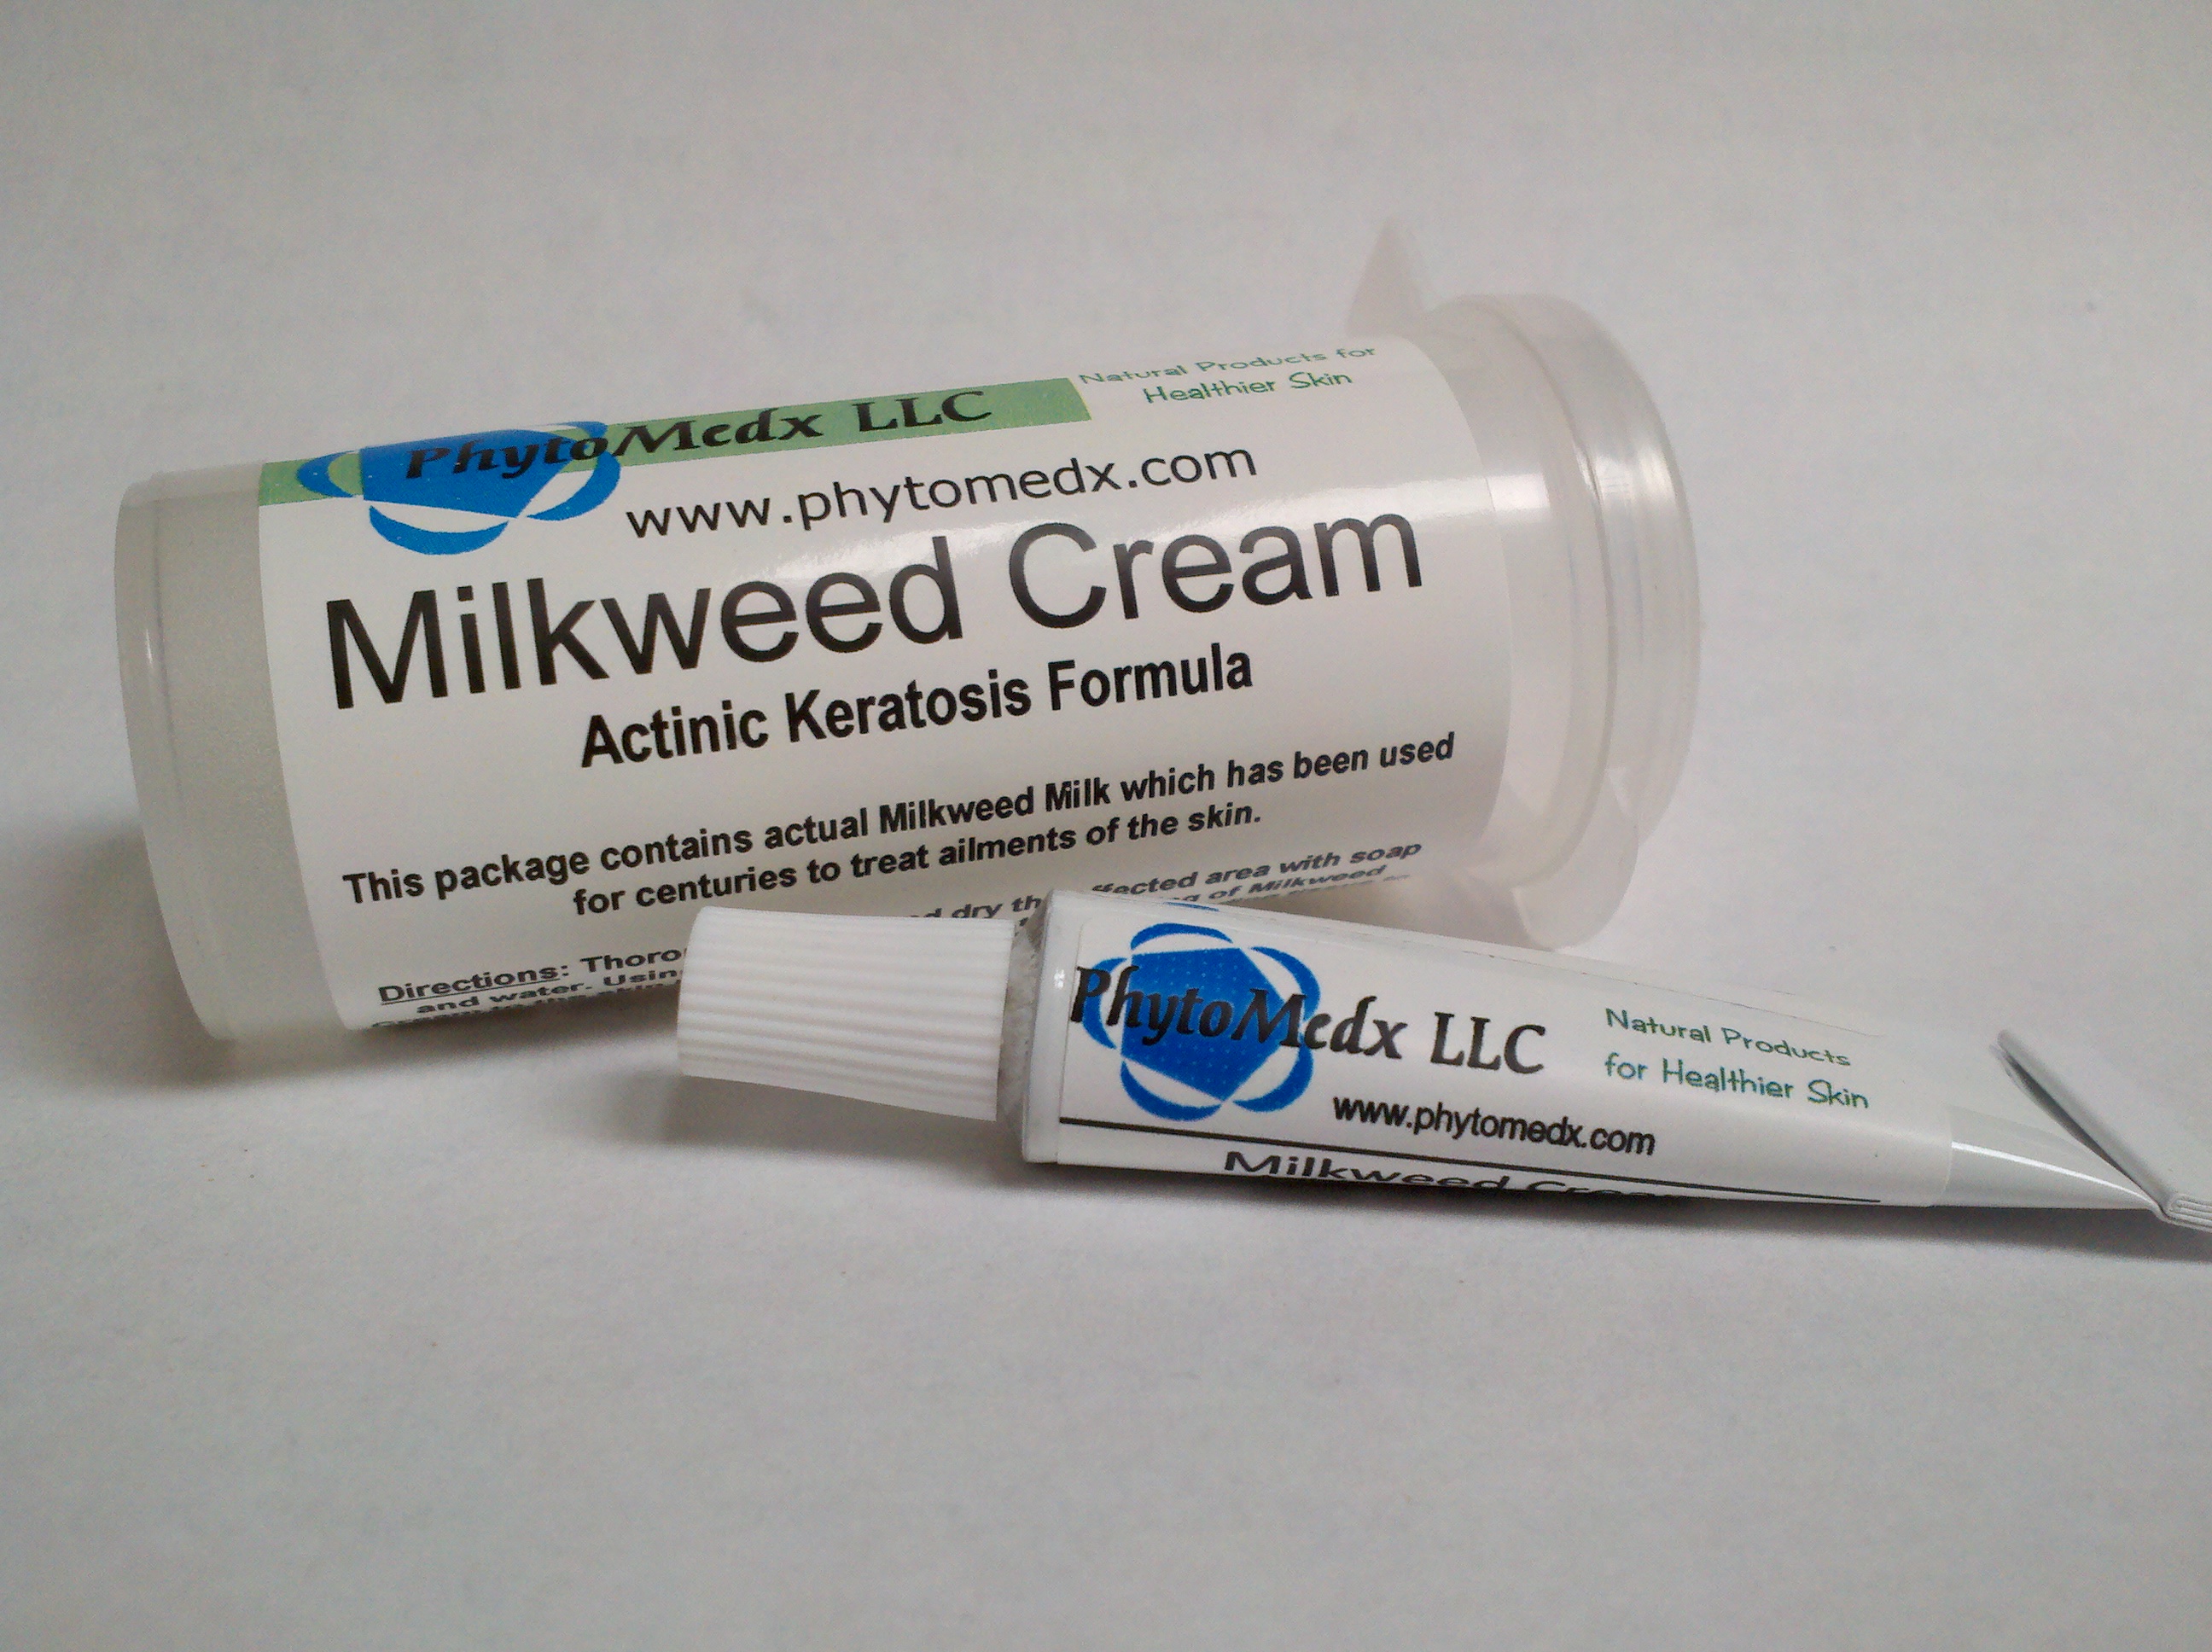 PhytoMedx Milkweed Cream -Actinic Keratosis Formula